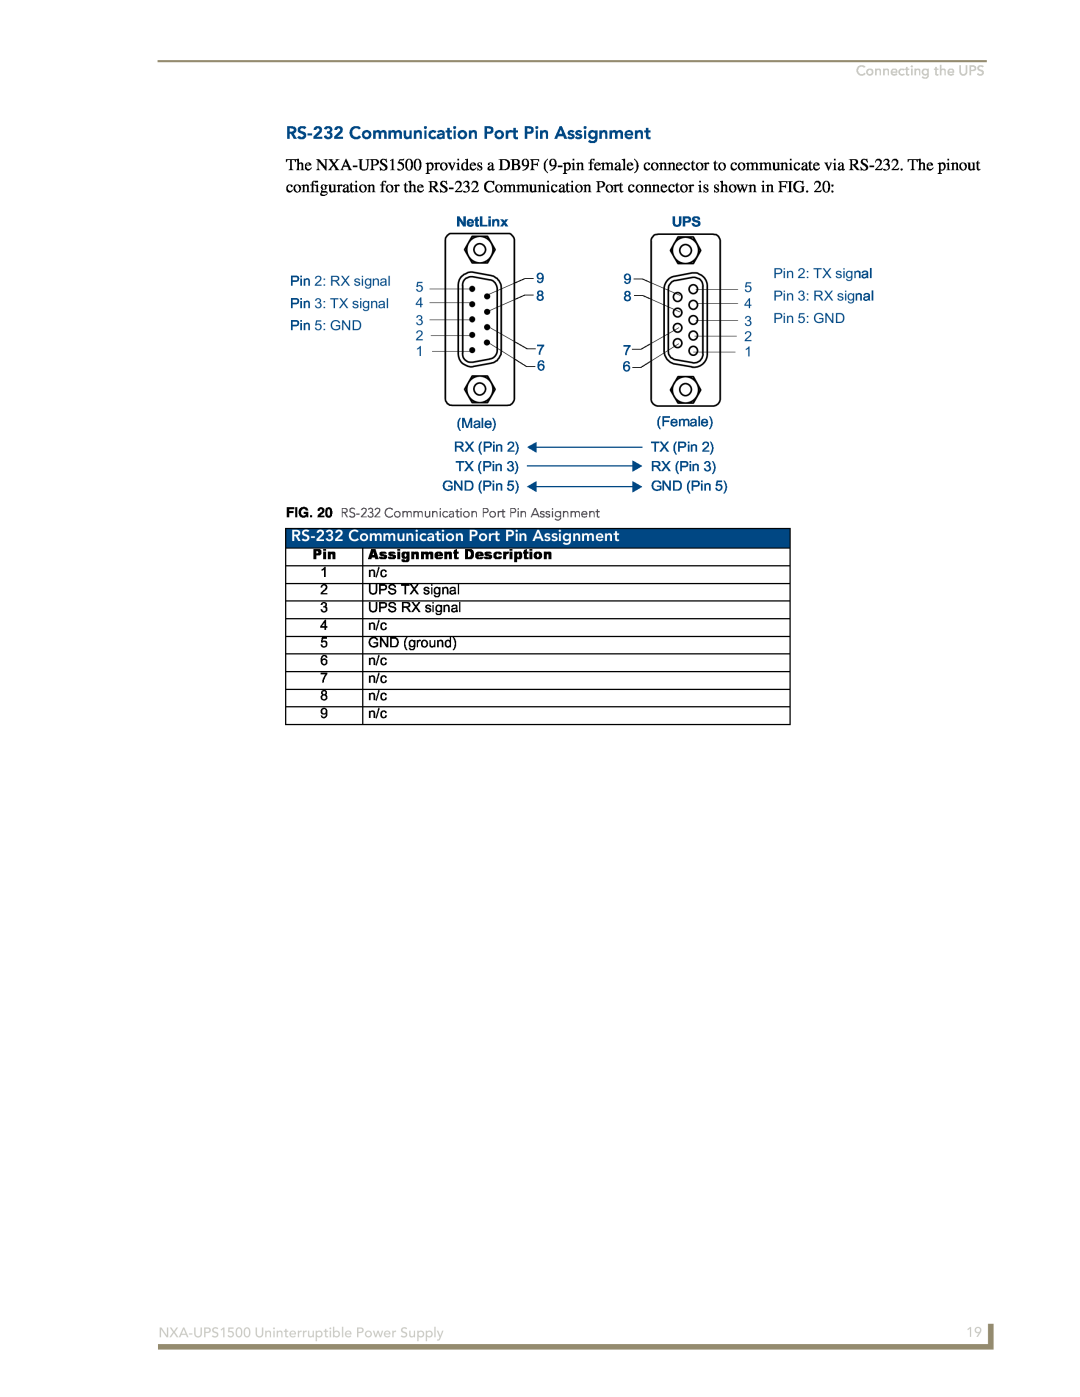 AMX NXA-UPS1500 manual RS-232 Communication Port Pin Assignment, Connecting the UPS, NetLinxUPS, Assignment Description 